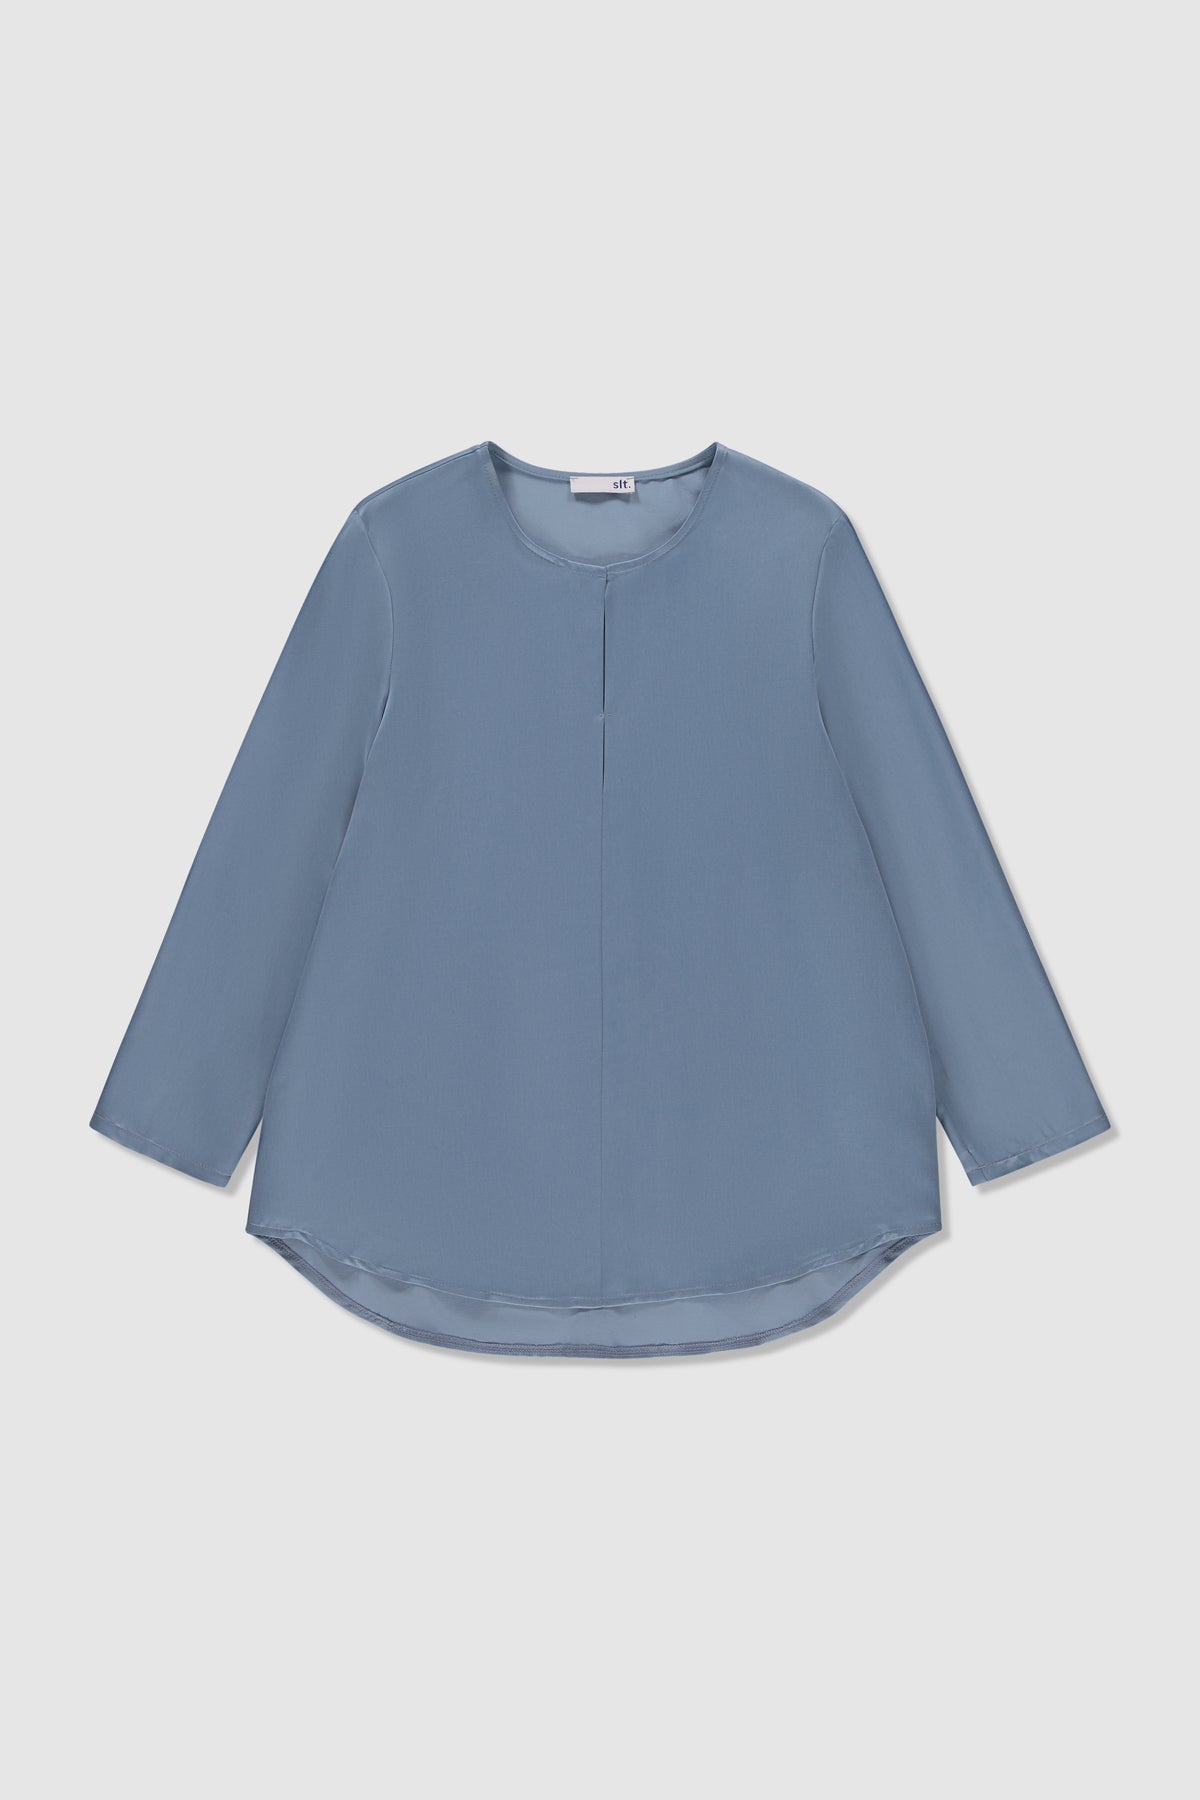 HÉLÉNIE. Straight blouse with two slits. Plain natural color